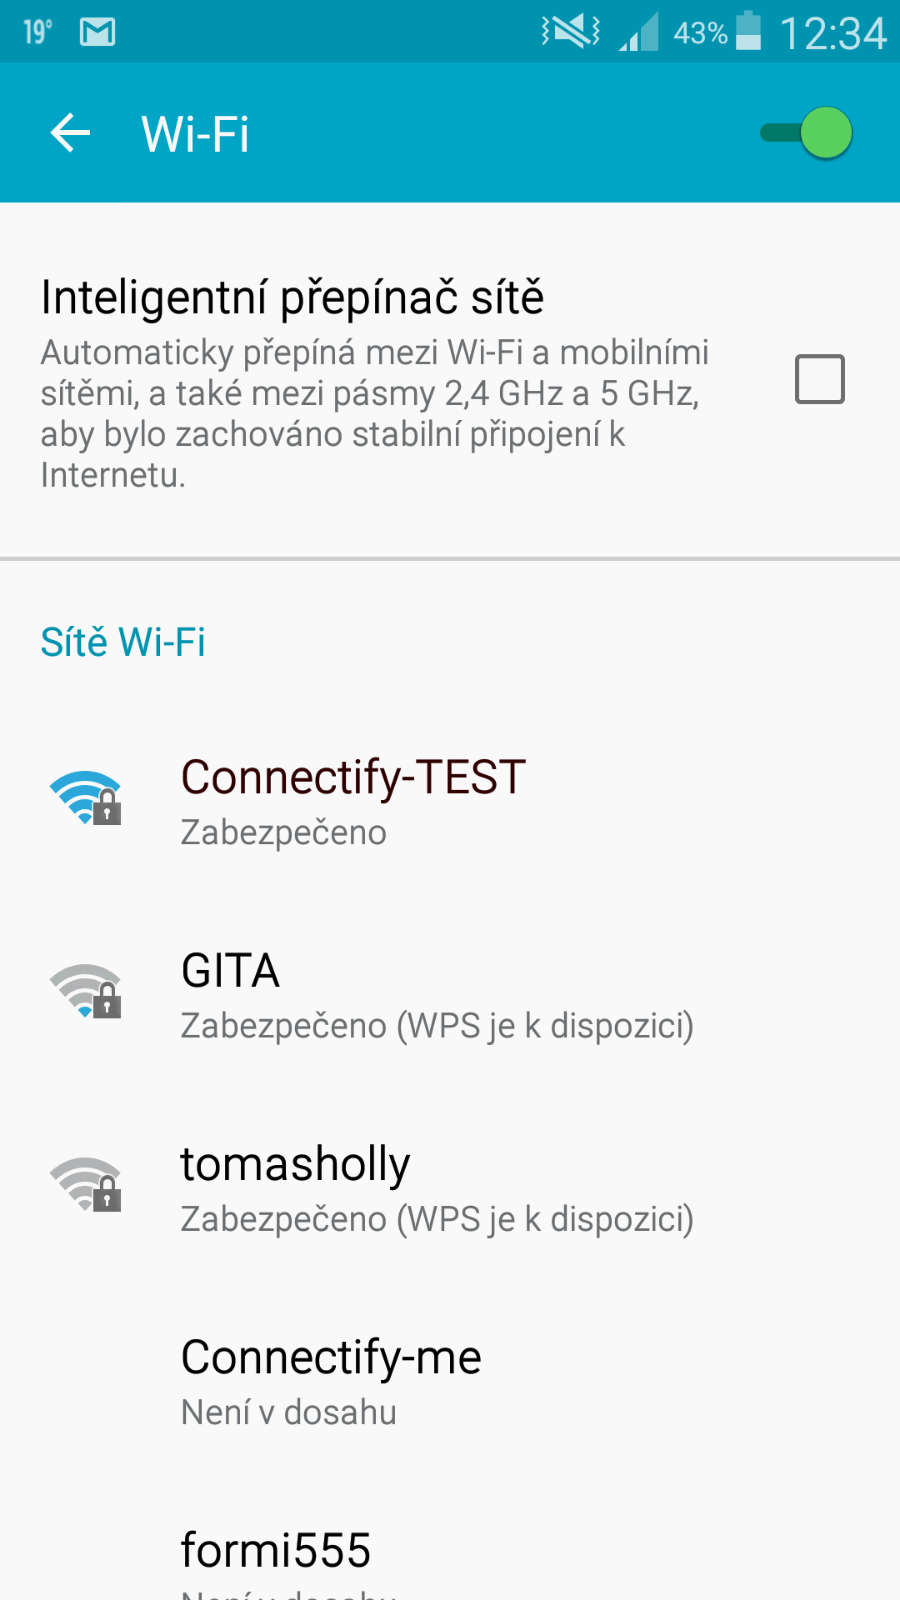 Wi-Fi-1.png